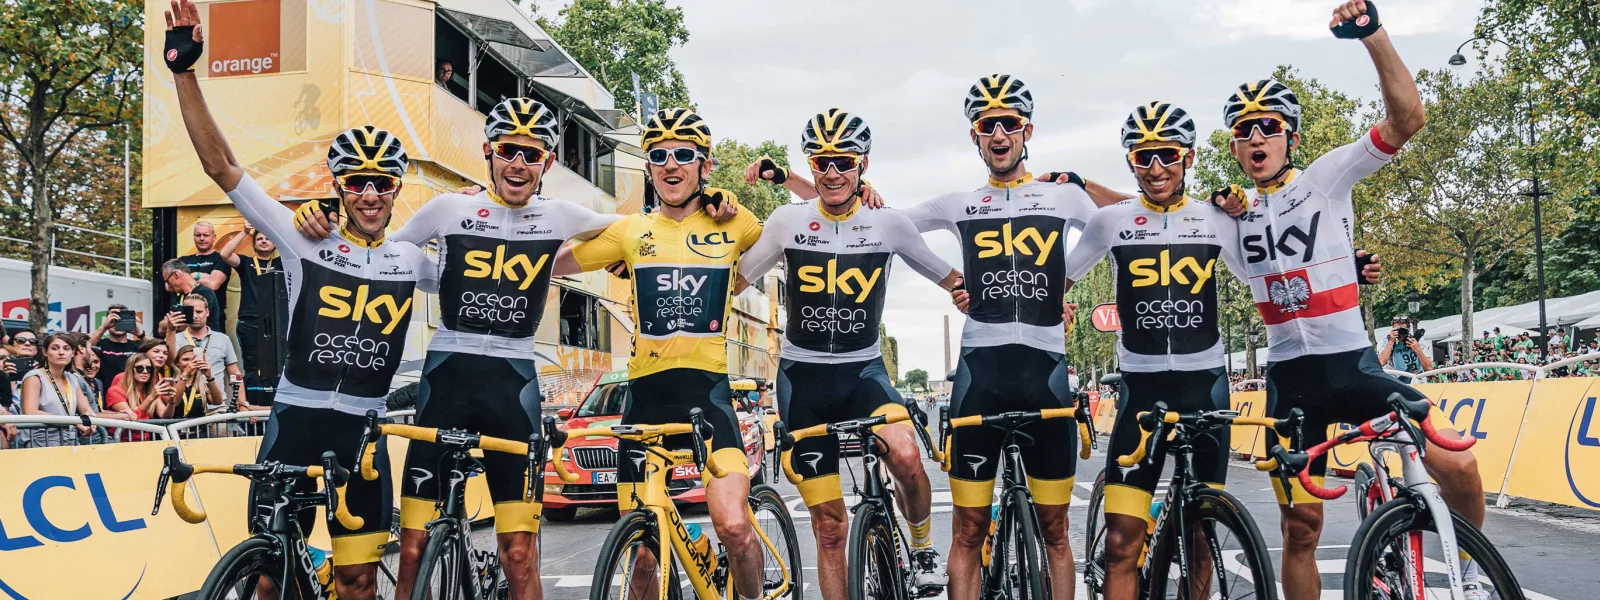 Foto - Ciclismo, Team Sky diventa Ineos, Ratcliffe il nuovo proprietario